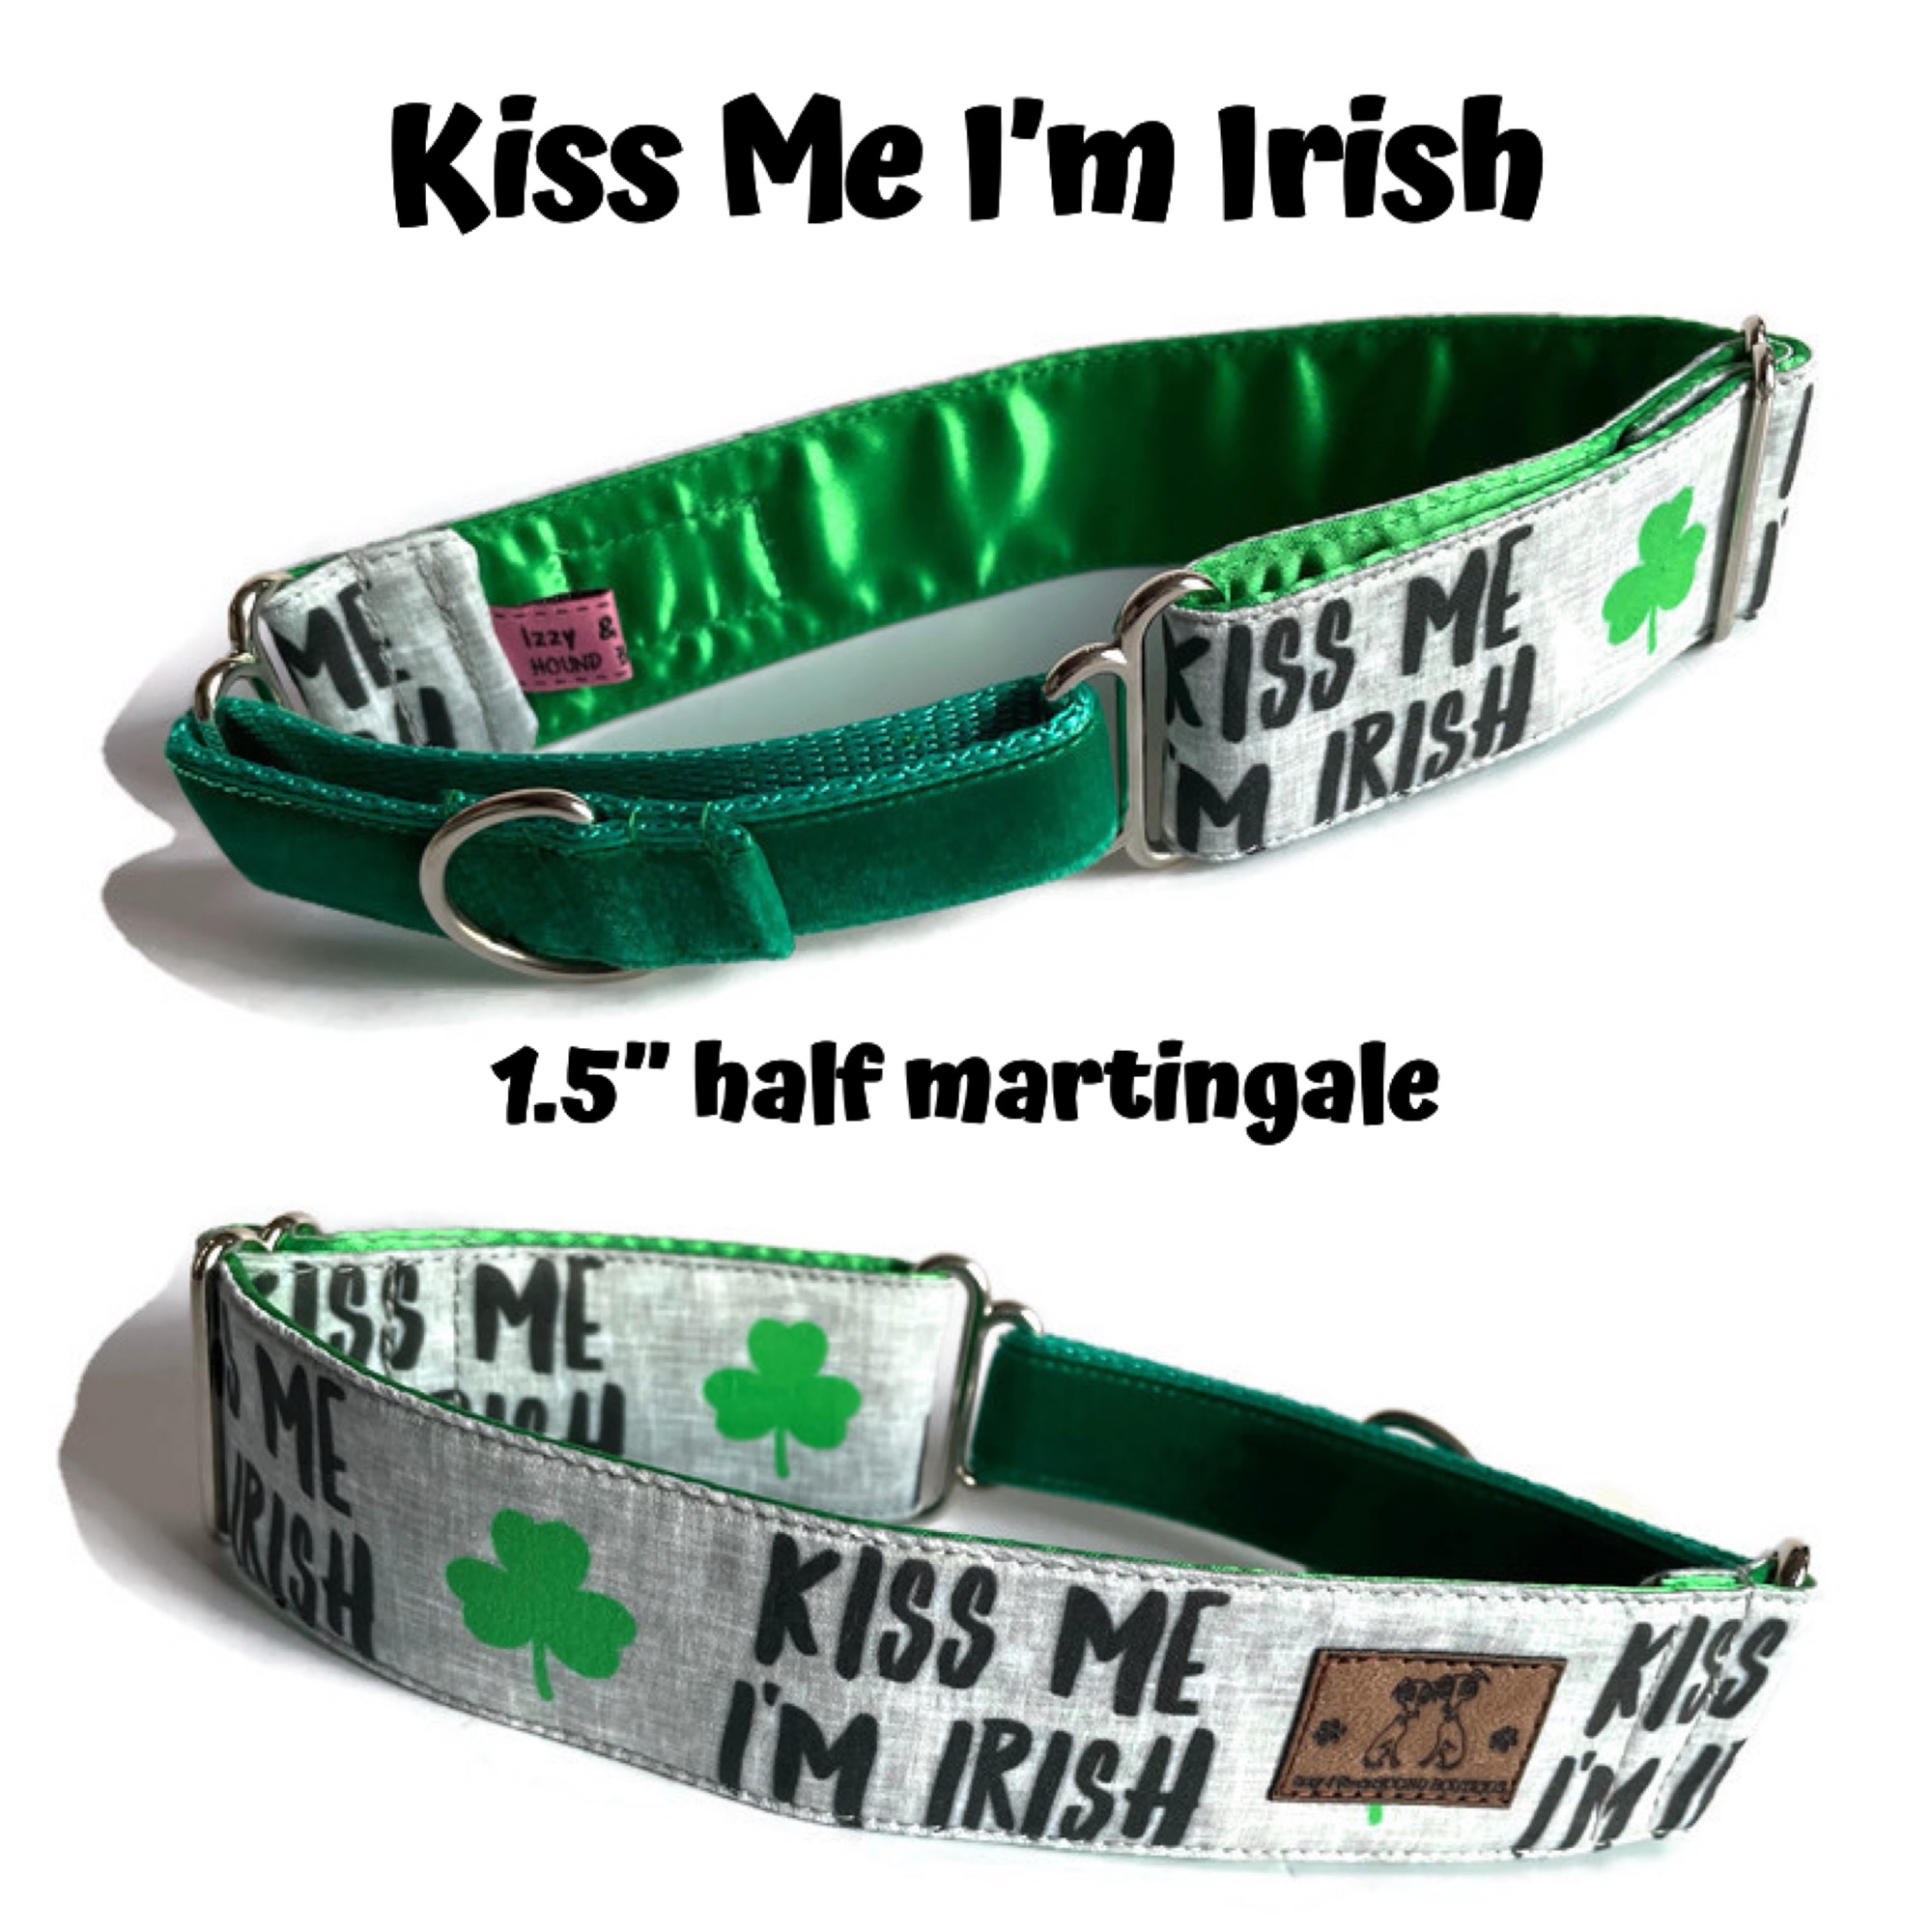 Kiss me i'm irish collar